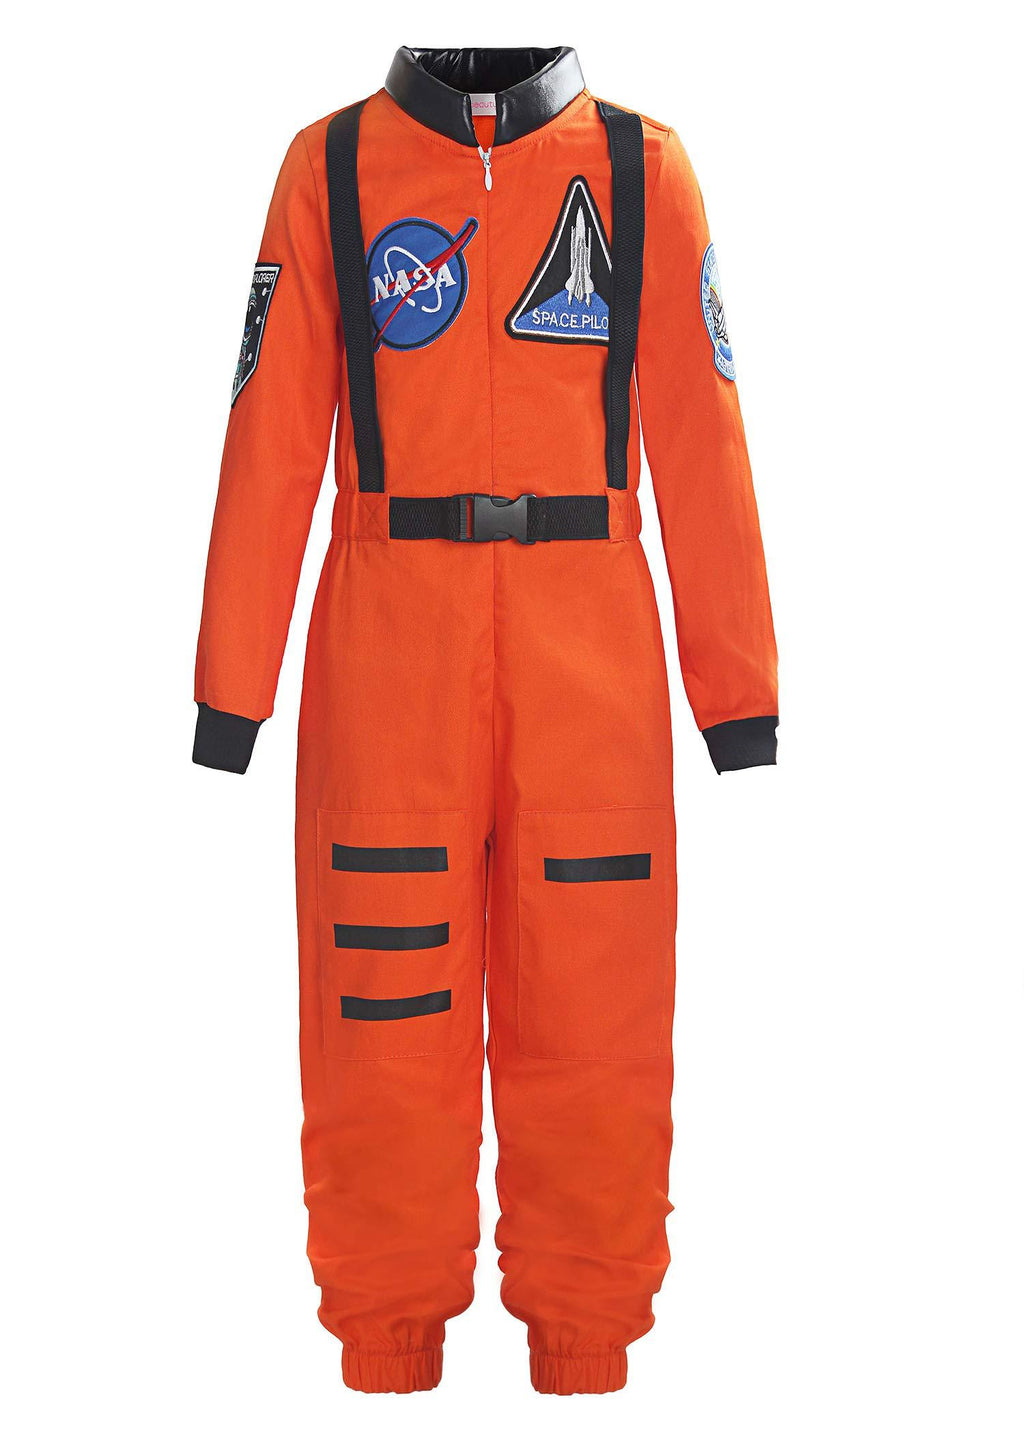 [Australia] - ReliBeauty Boys Girls Kids Children Astronaut Role Play Costume 2T-3T Orange 